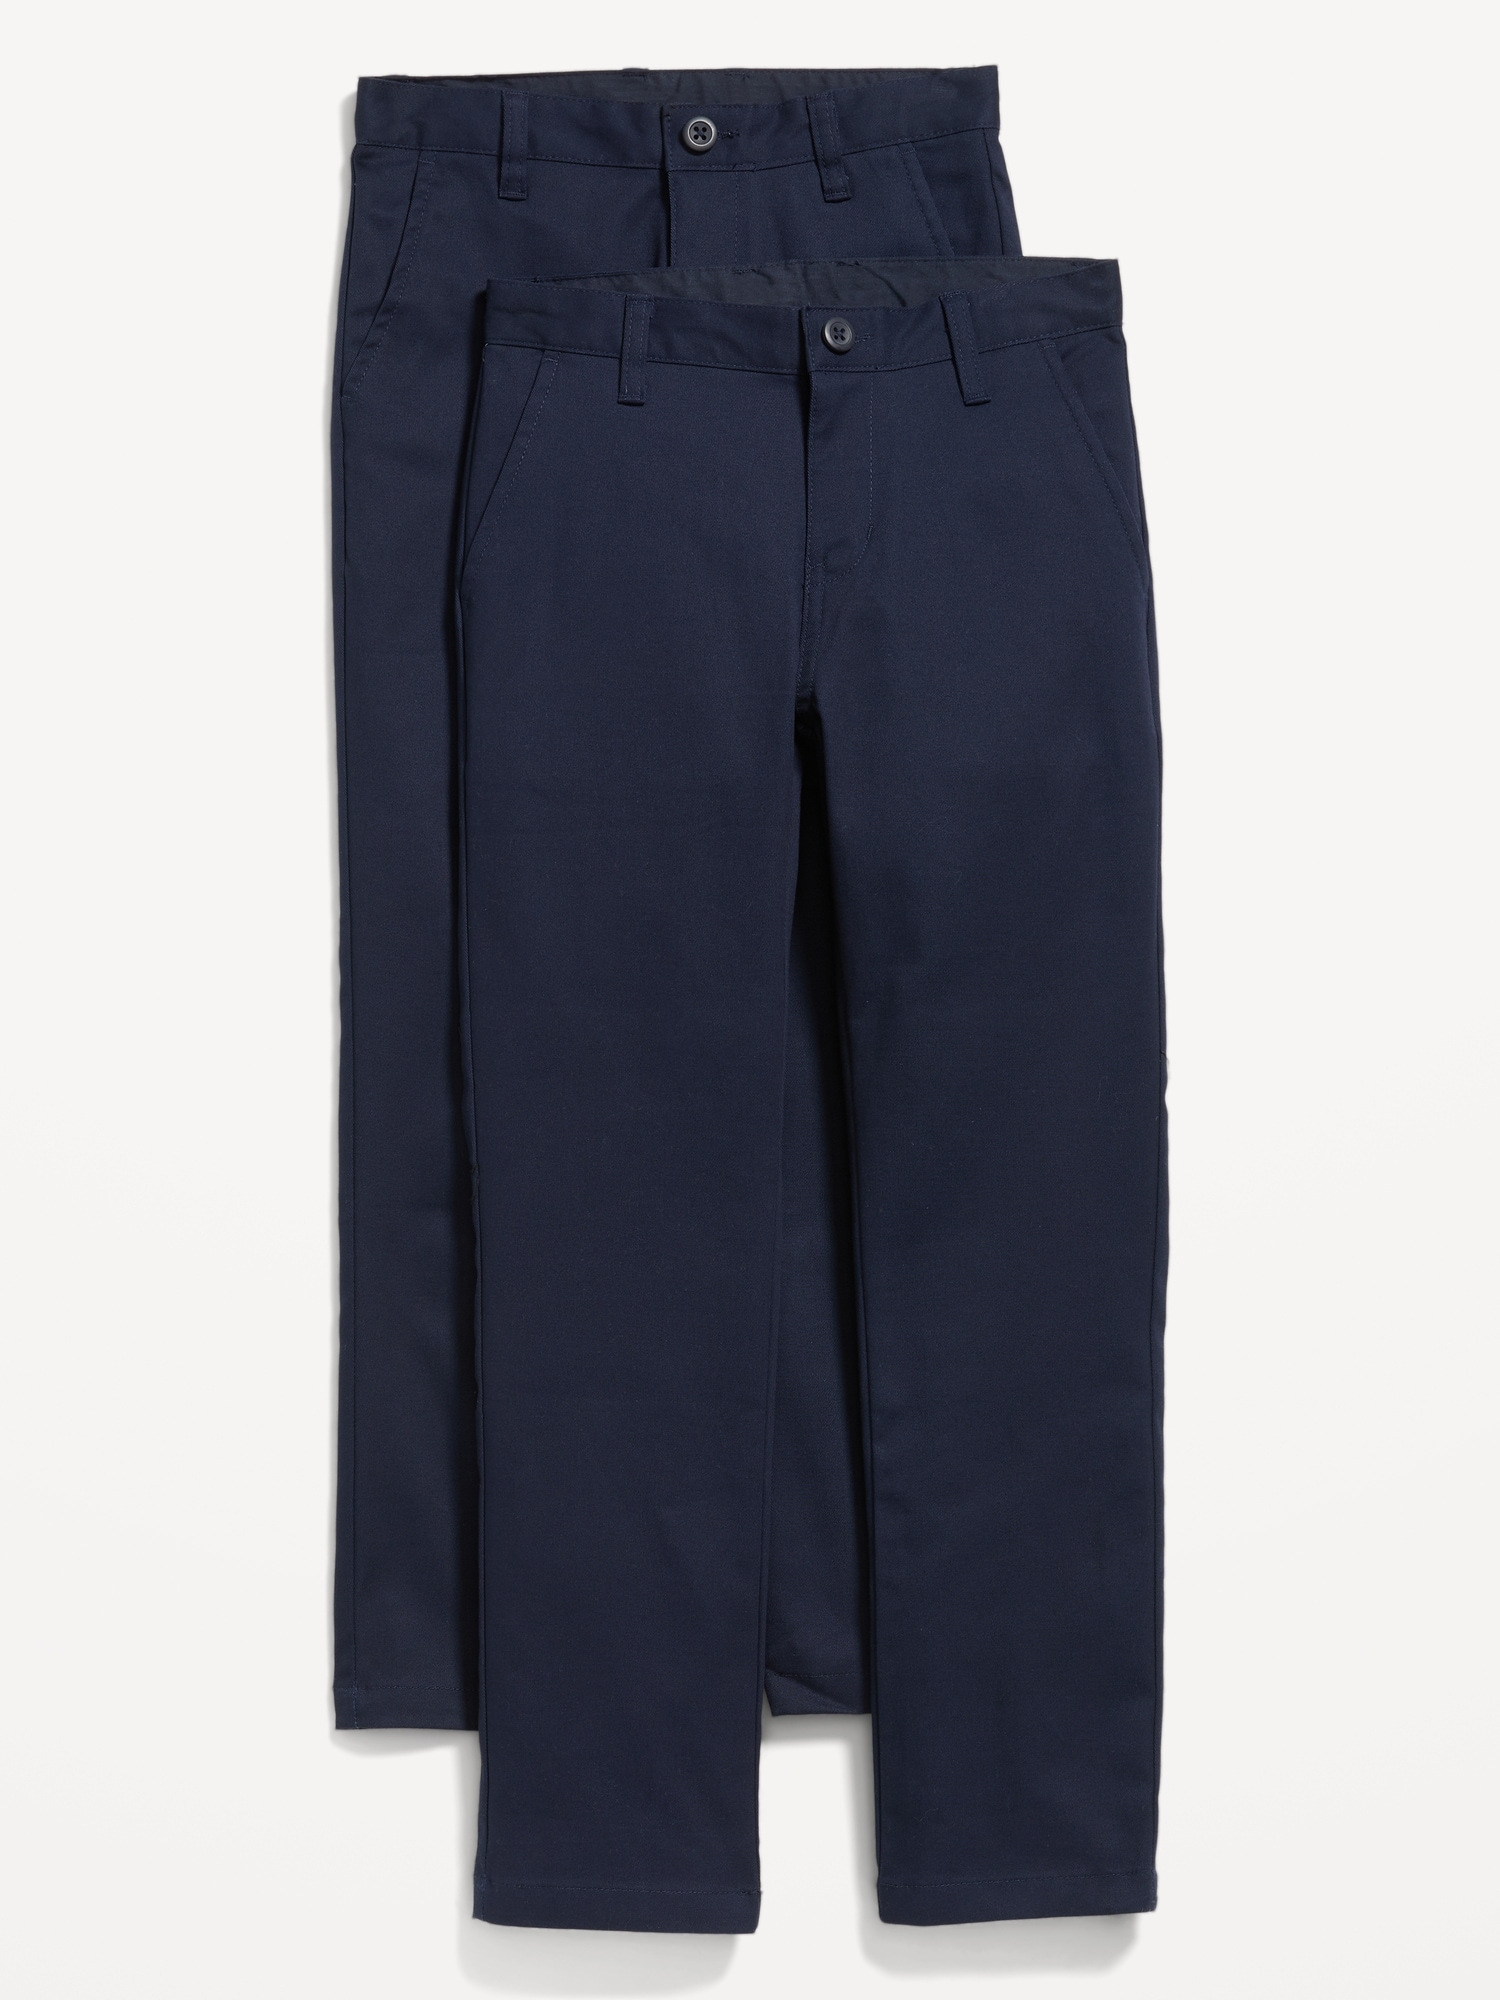 Old Navy Girls Size 14 Ink Blue Skinny School Uniform Pants 2 Pack NWT 